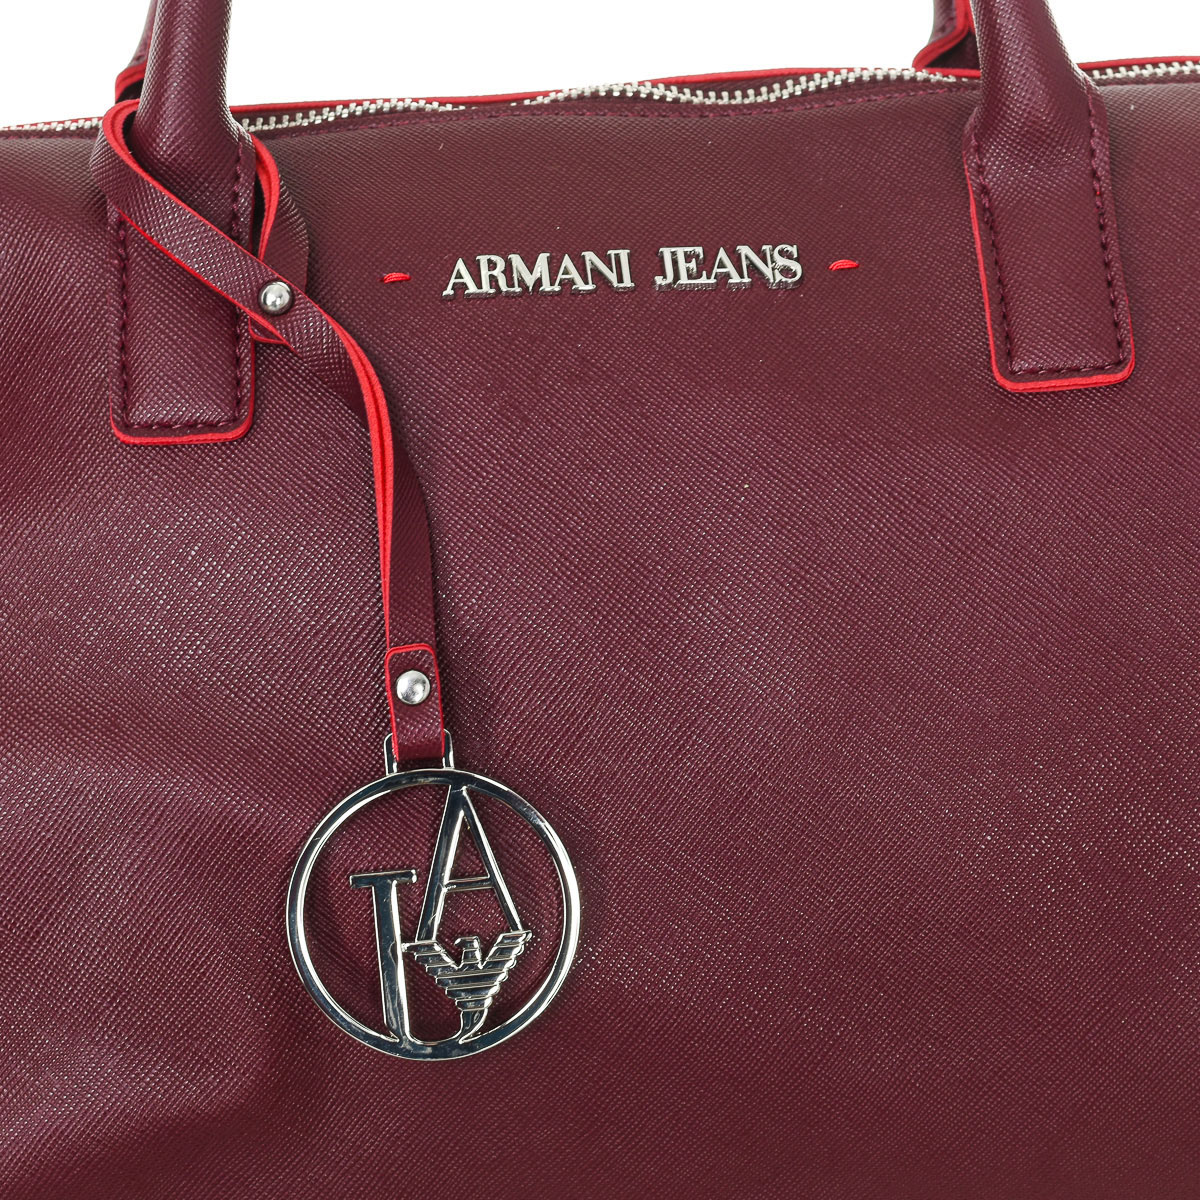 Price - Armani Jeans